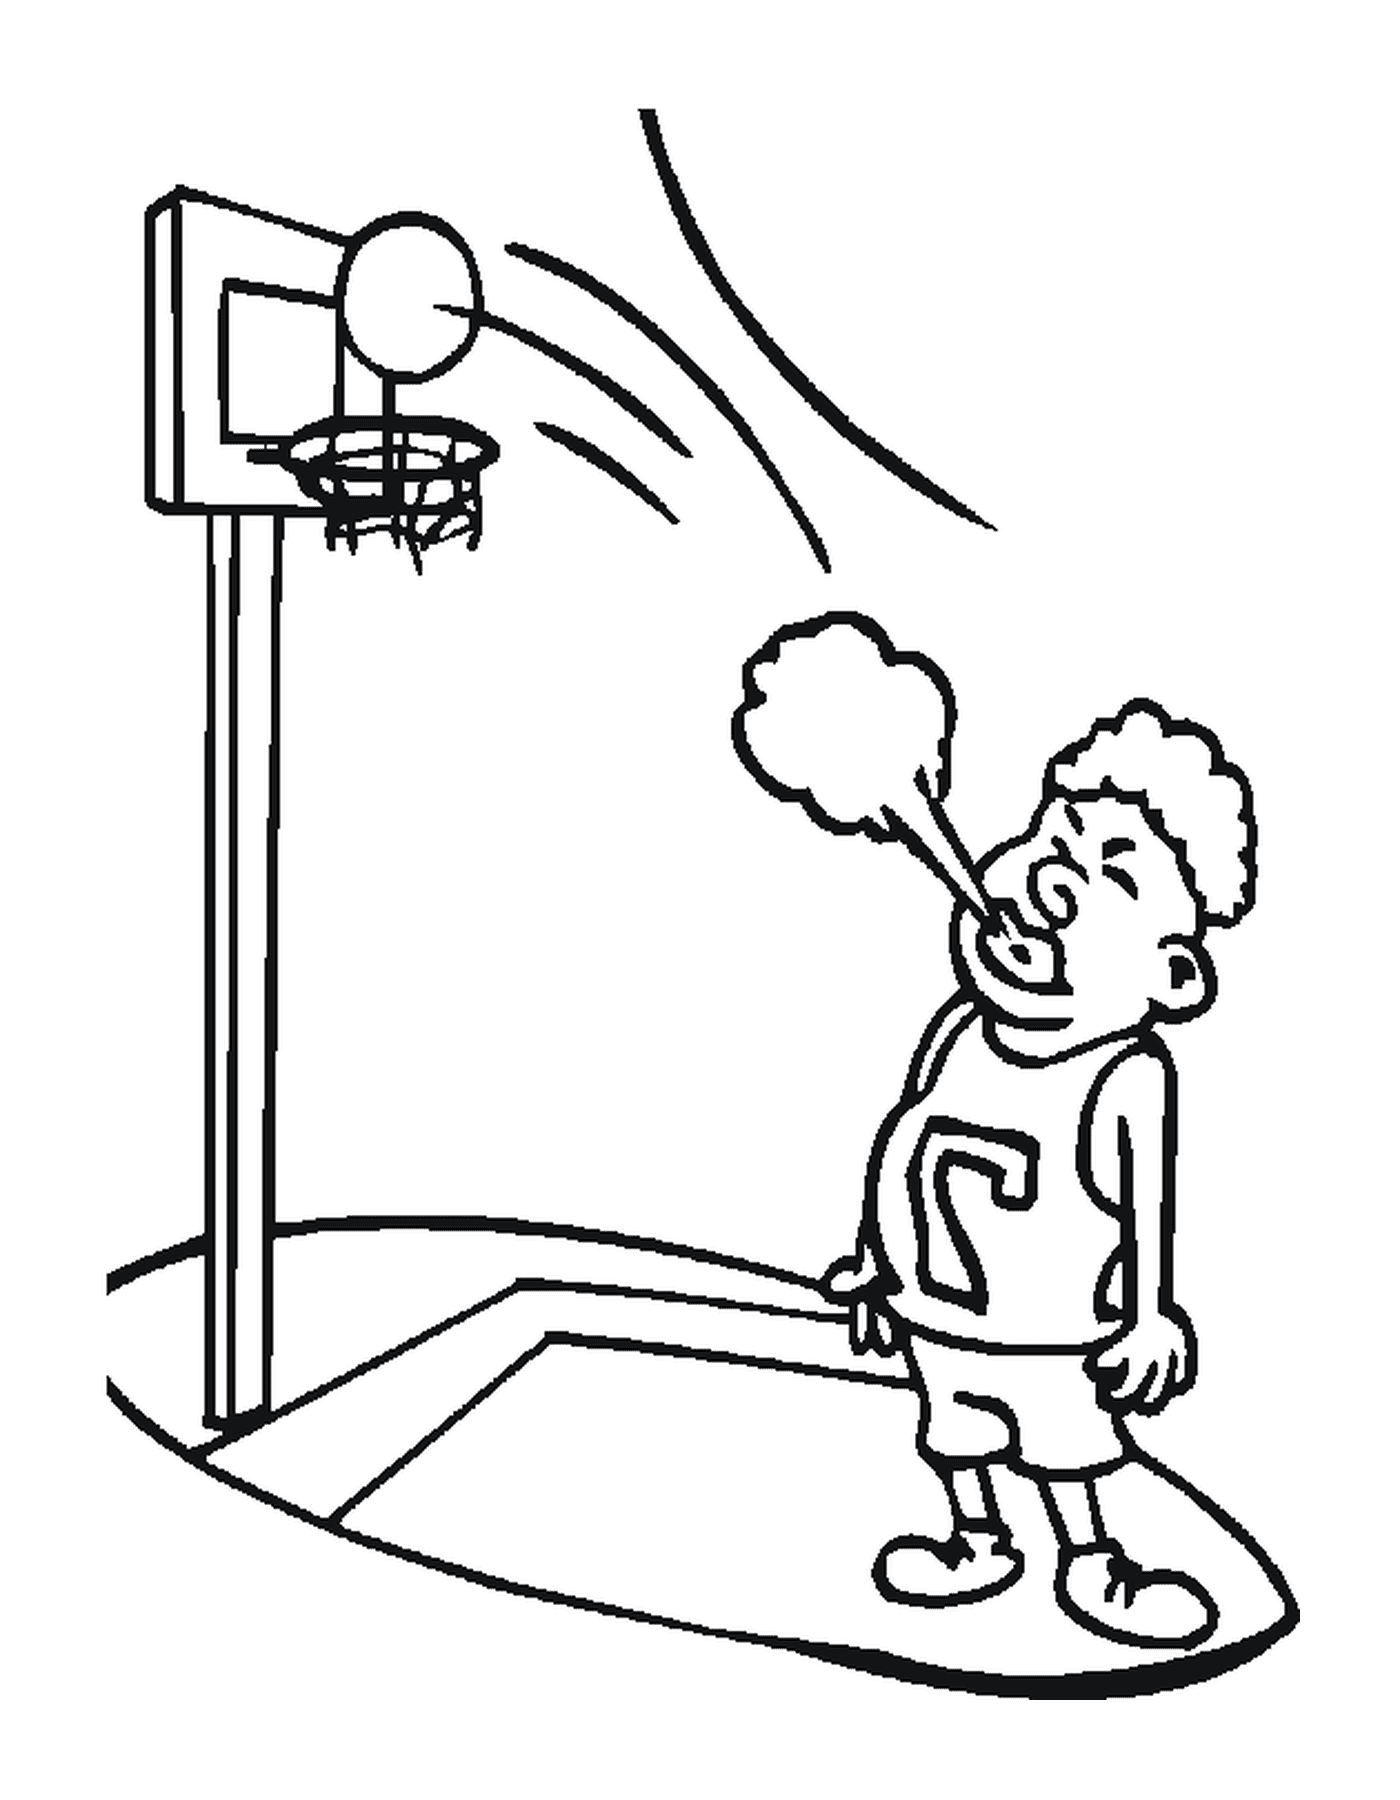  A basketball player blows 